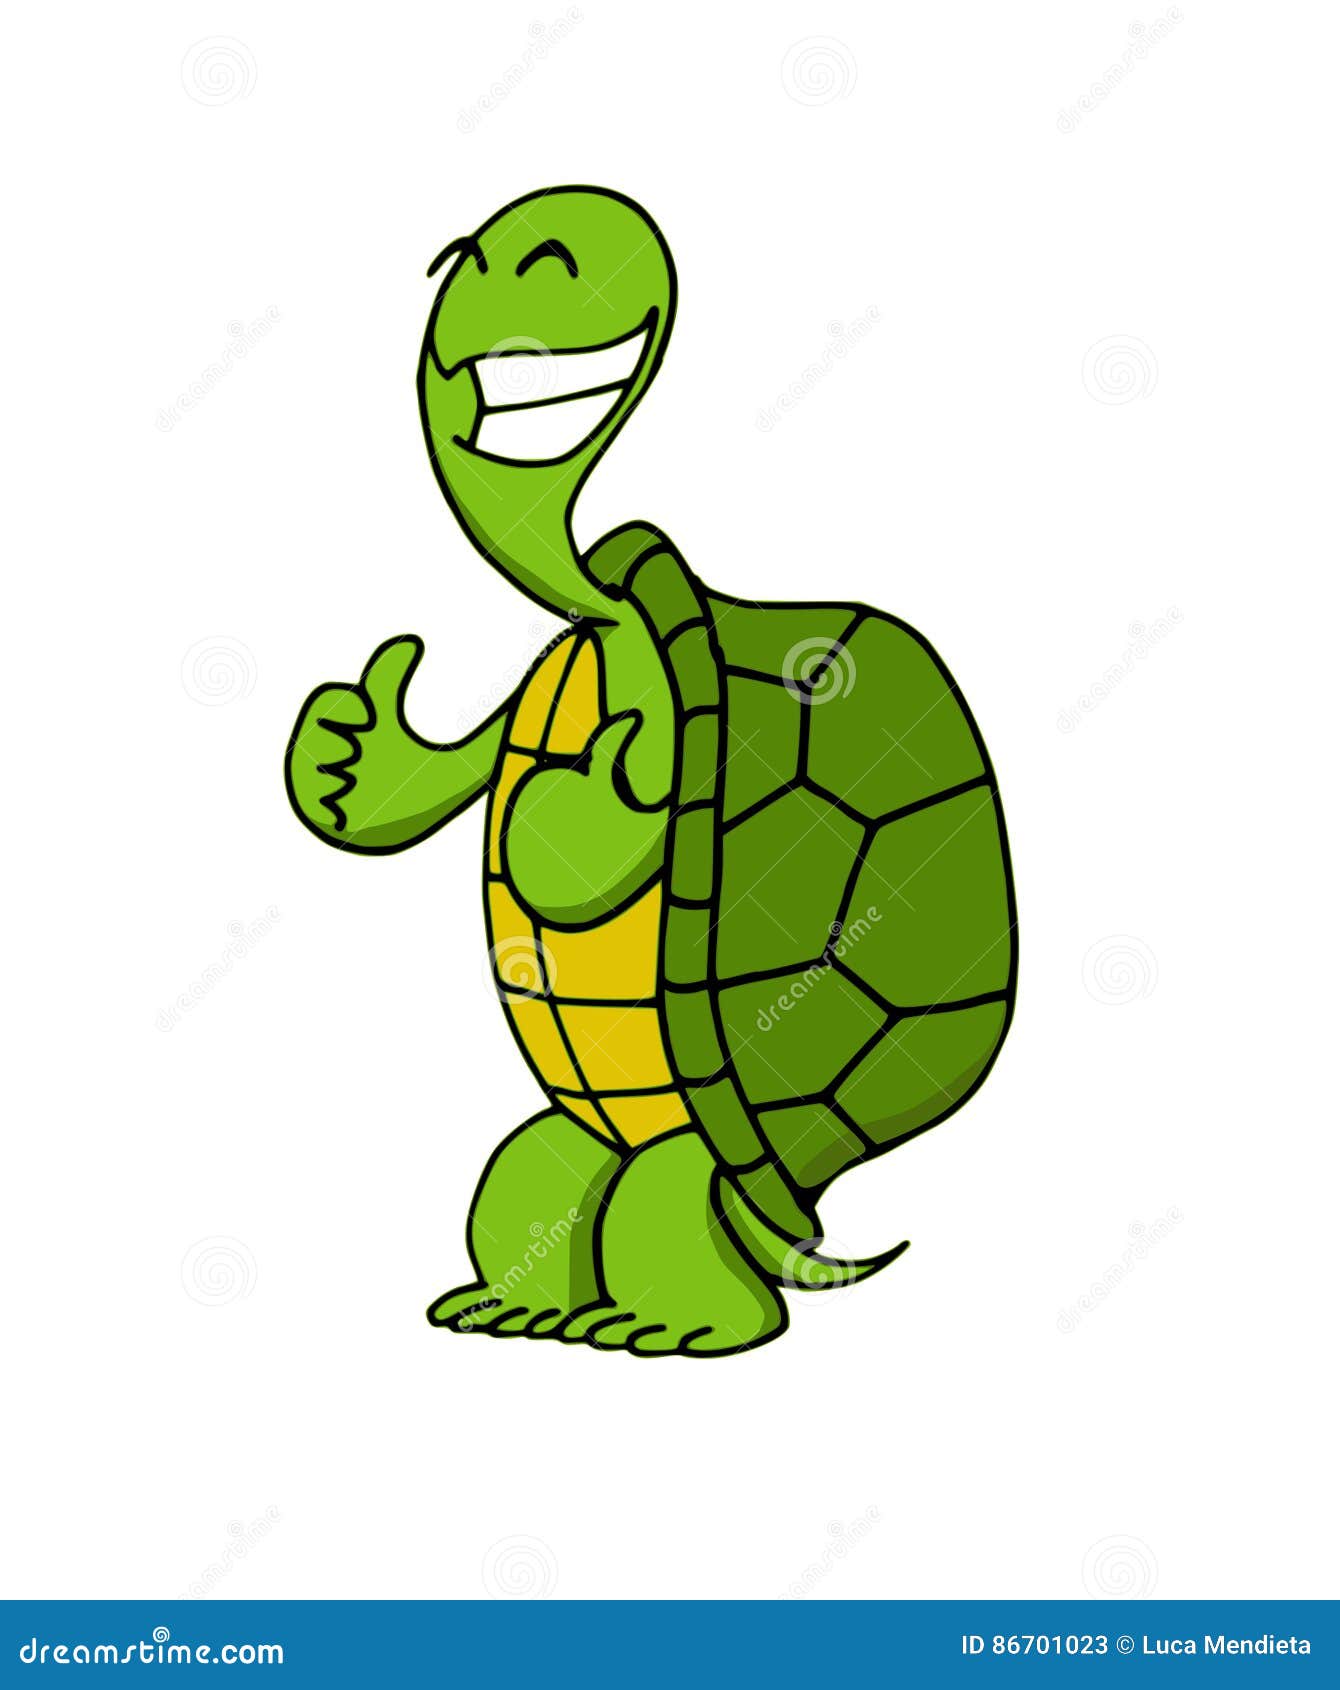 A happy turtle stock illustration. Illustration of reptile - 86701023